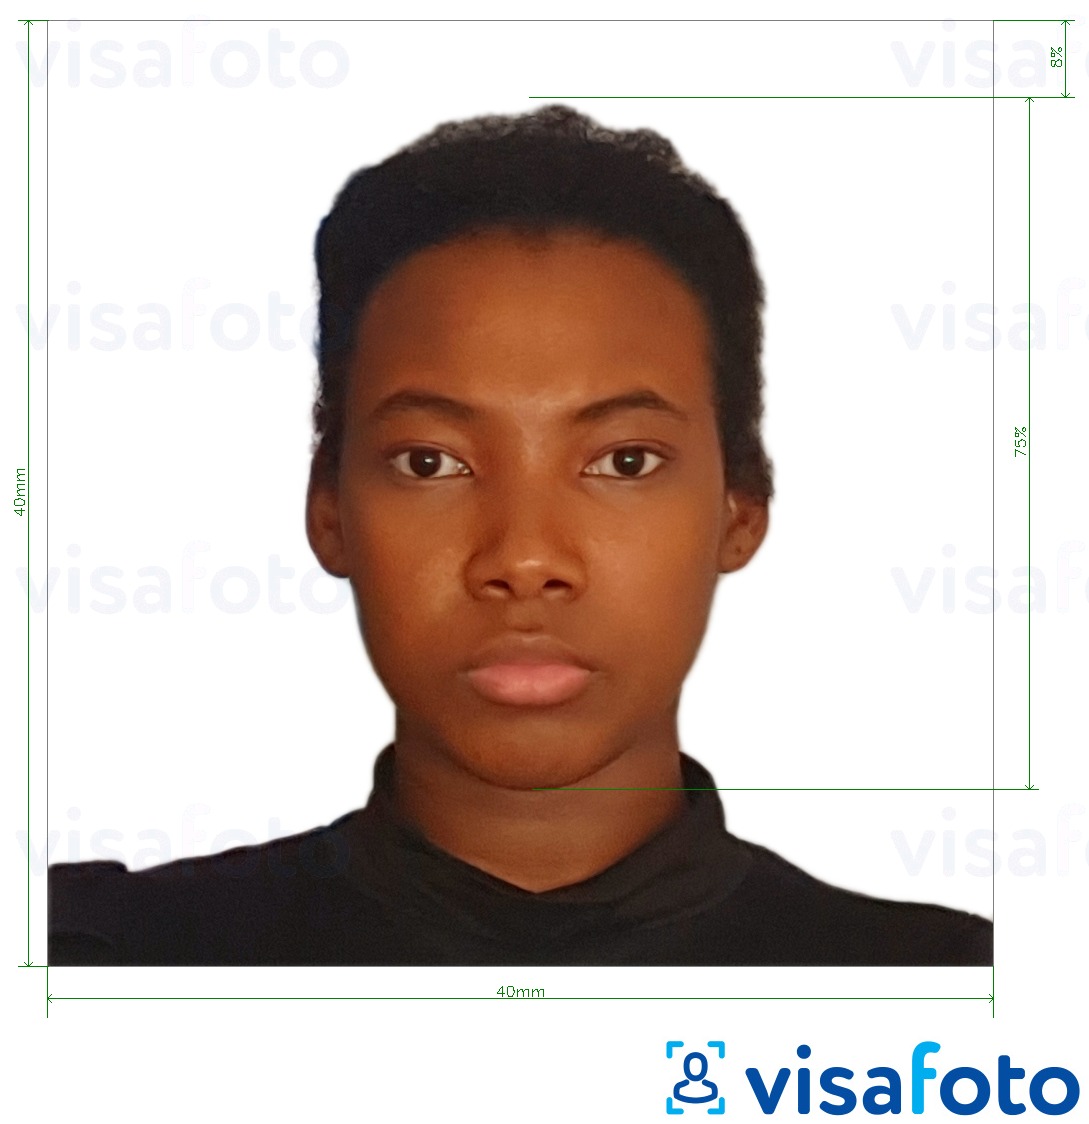 Камерун паспорт 4x4 см (40x40 мм) Болоцоот зургийн жишээ